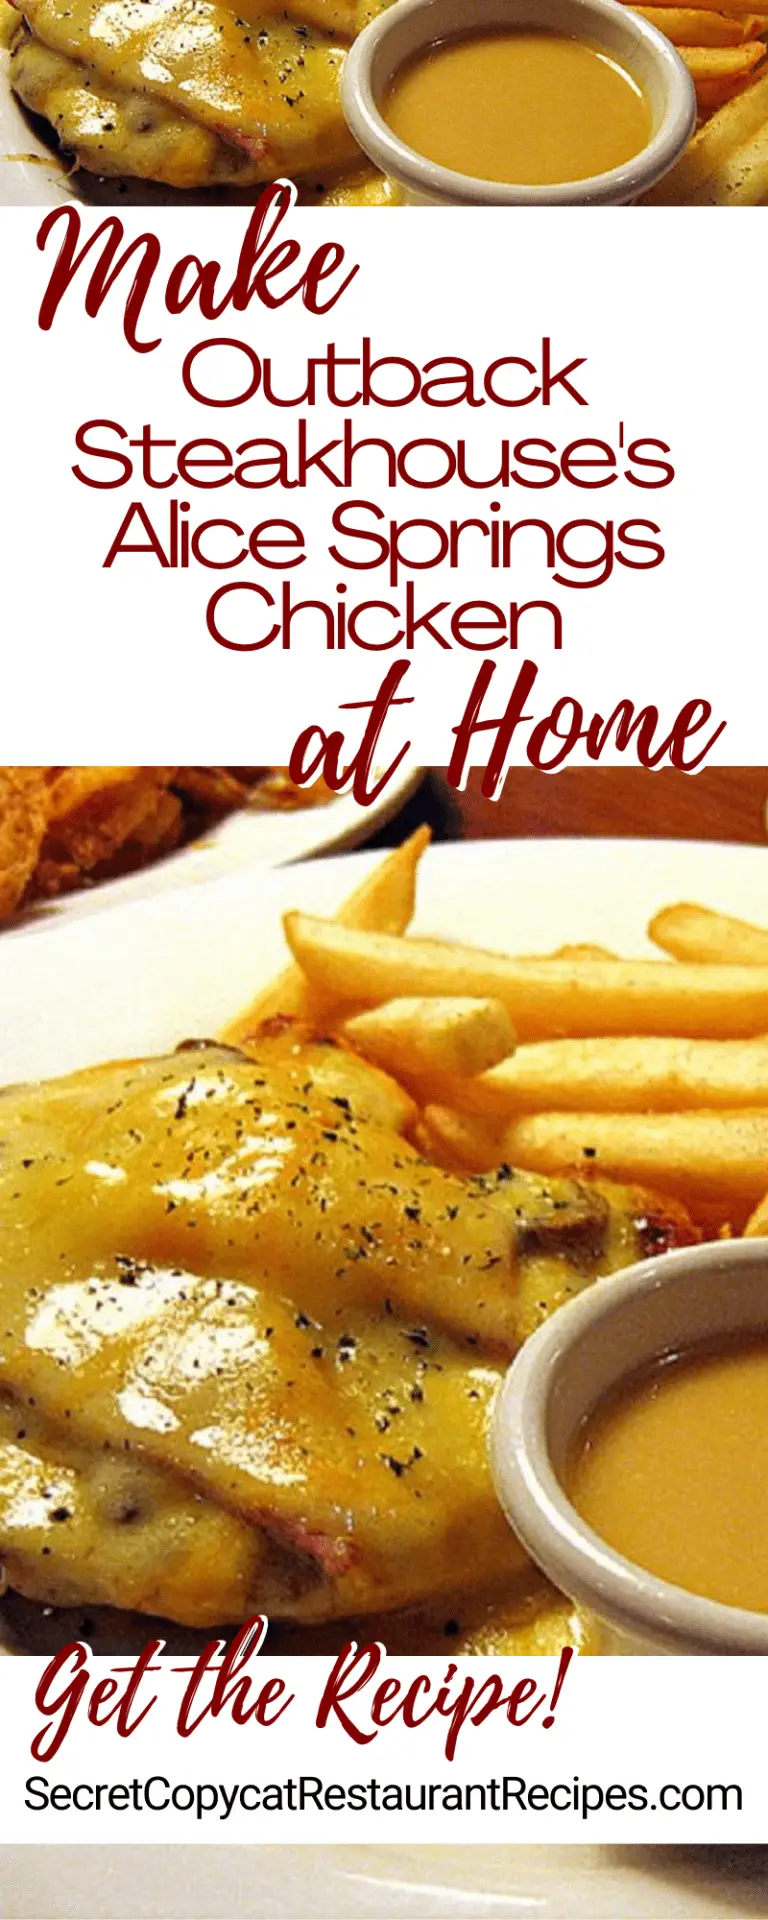 Outback Steakhouse's Alice Springs Chicken Restaurant Recipe